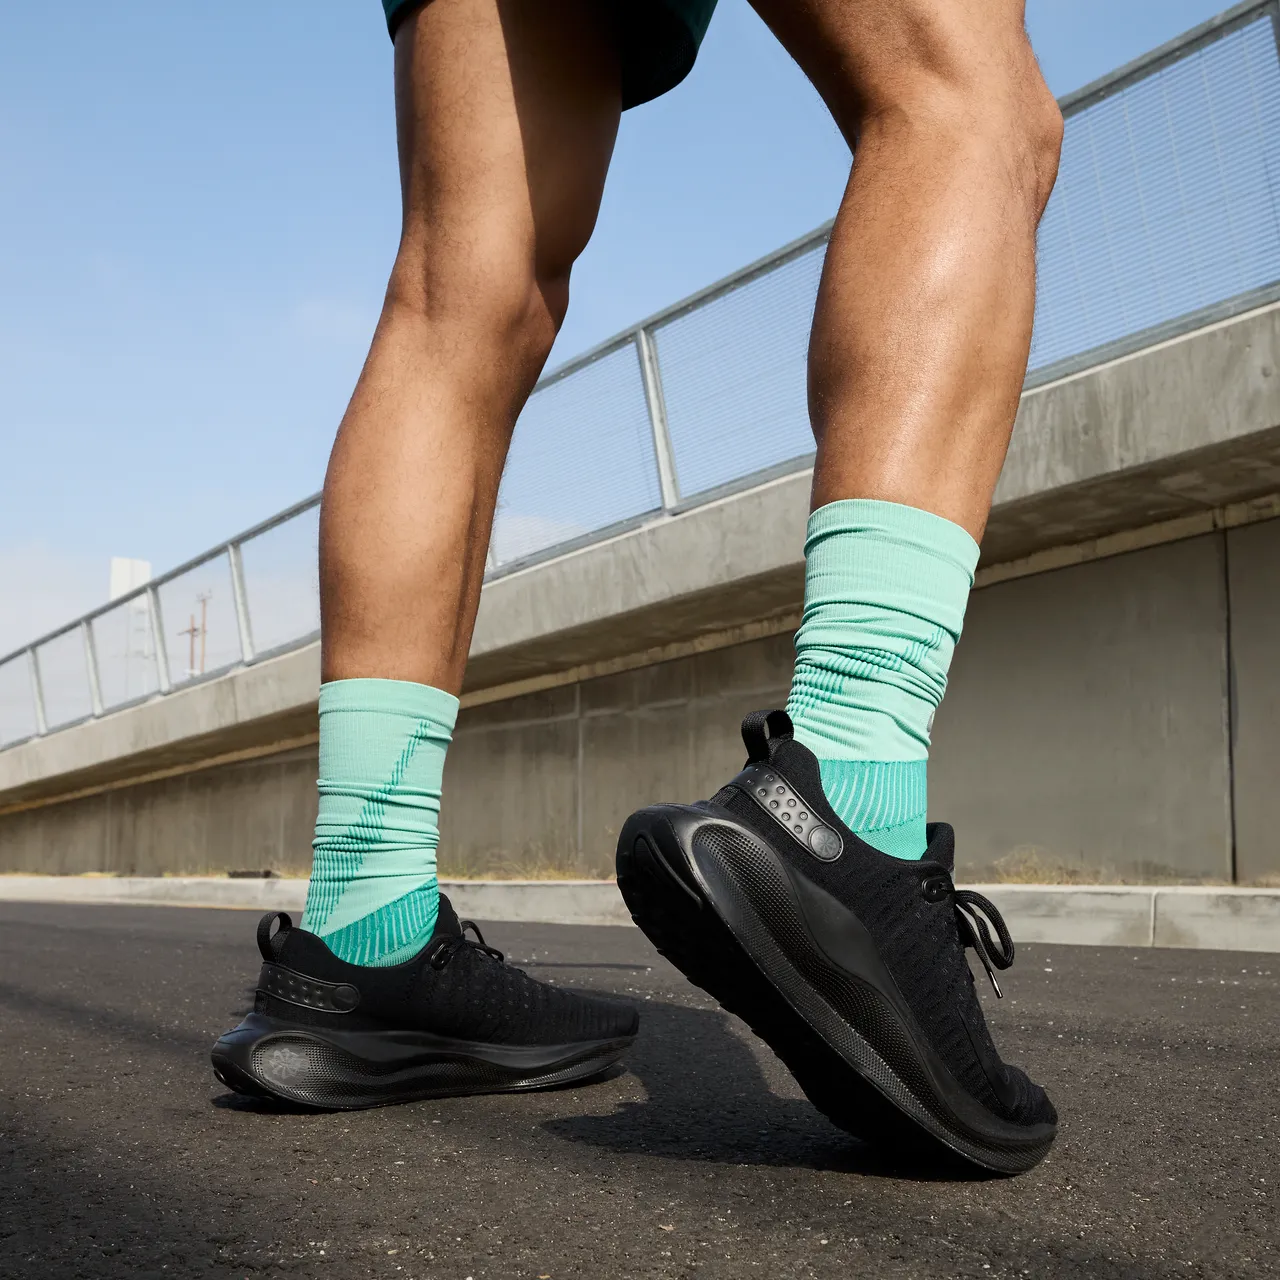 Nike InfinityRN 4 Men's Road Running Shoes - Black